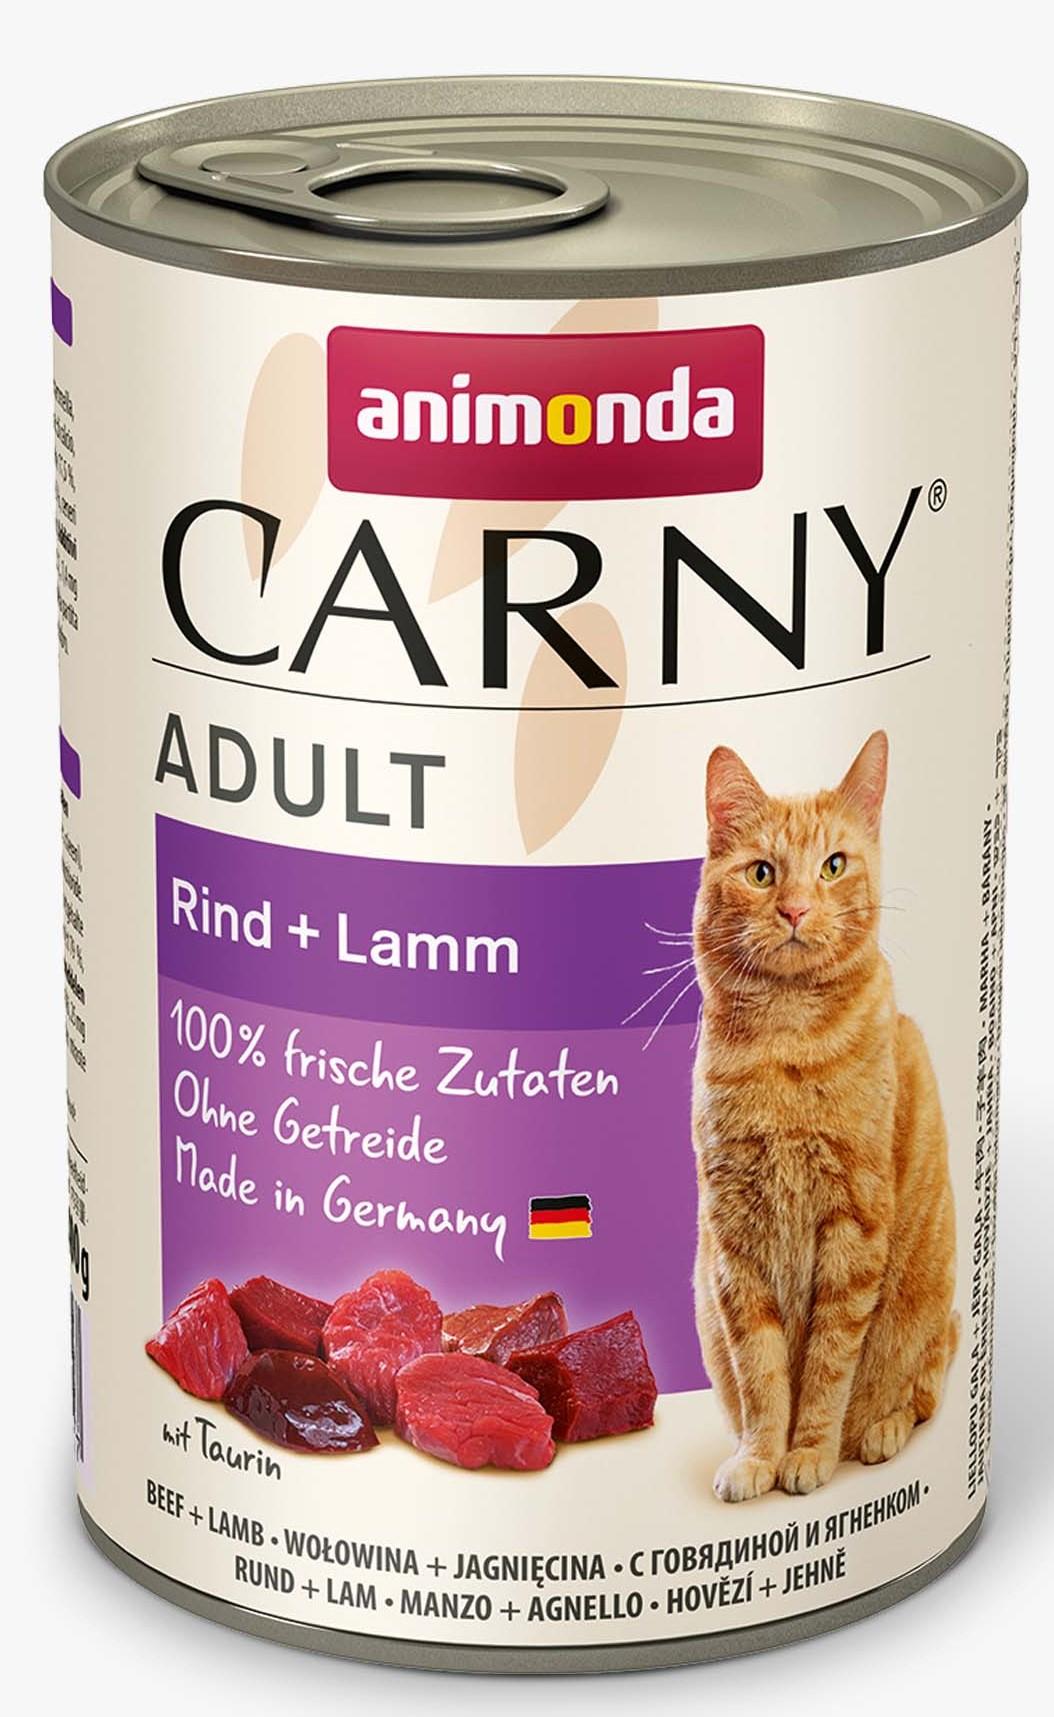 Animonda Carny Adult Beef + Lamb 